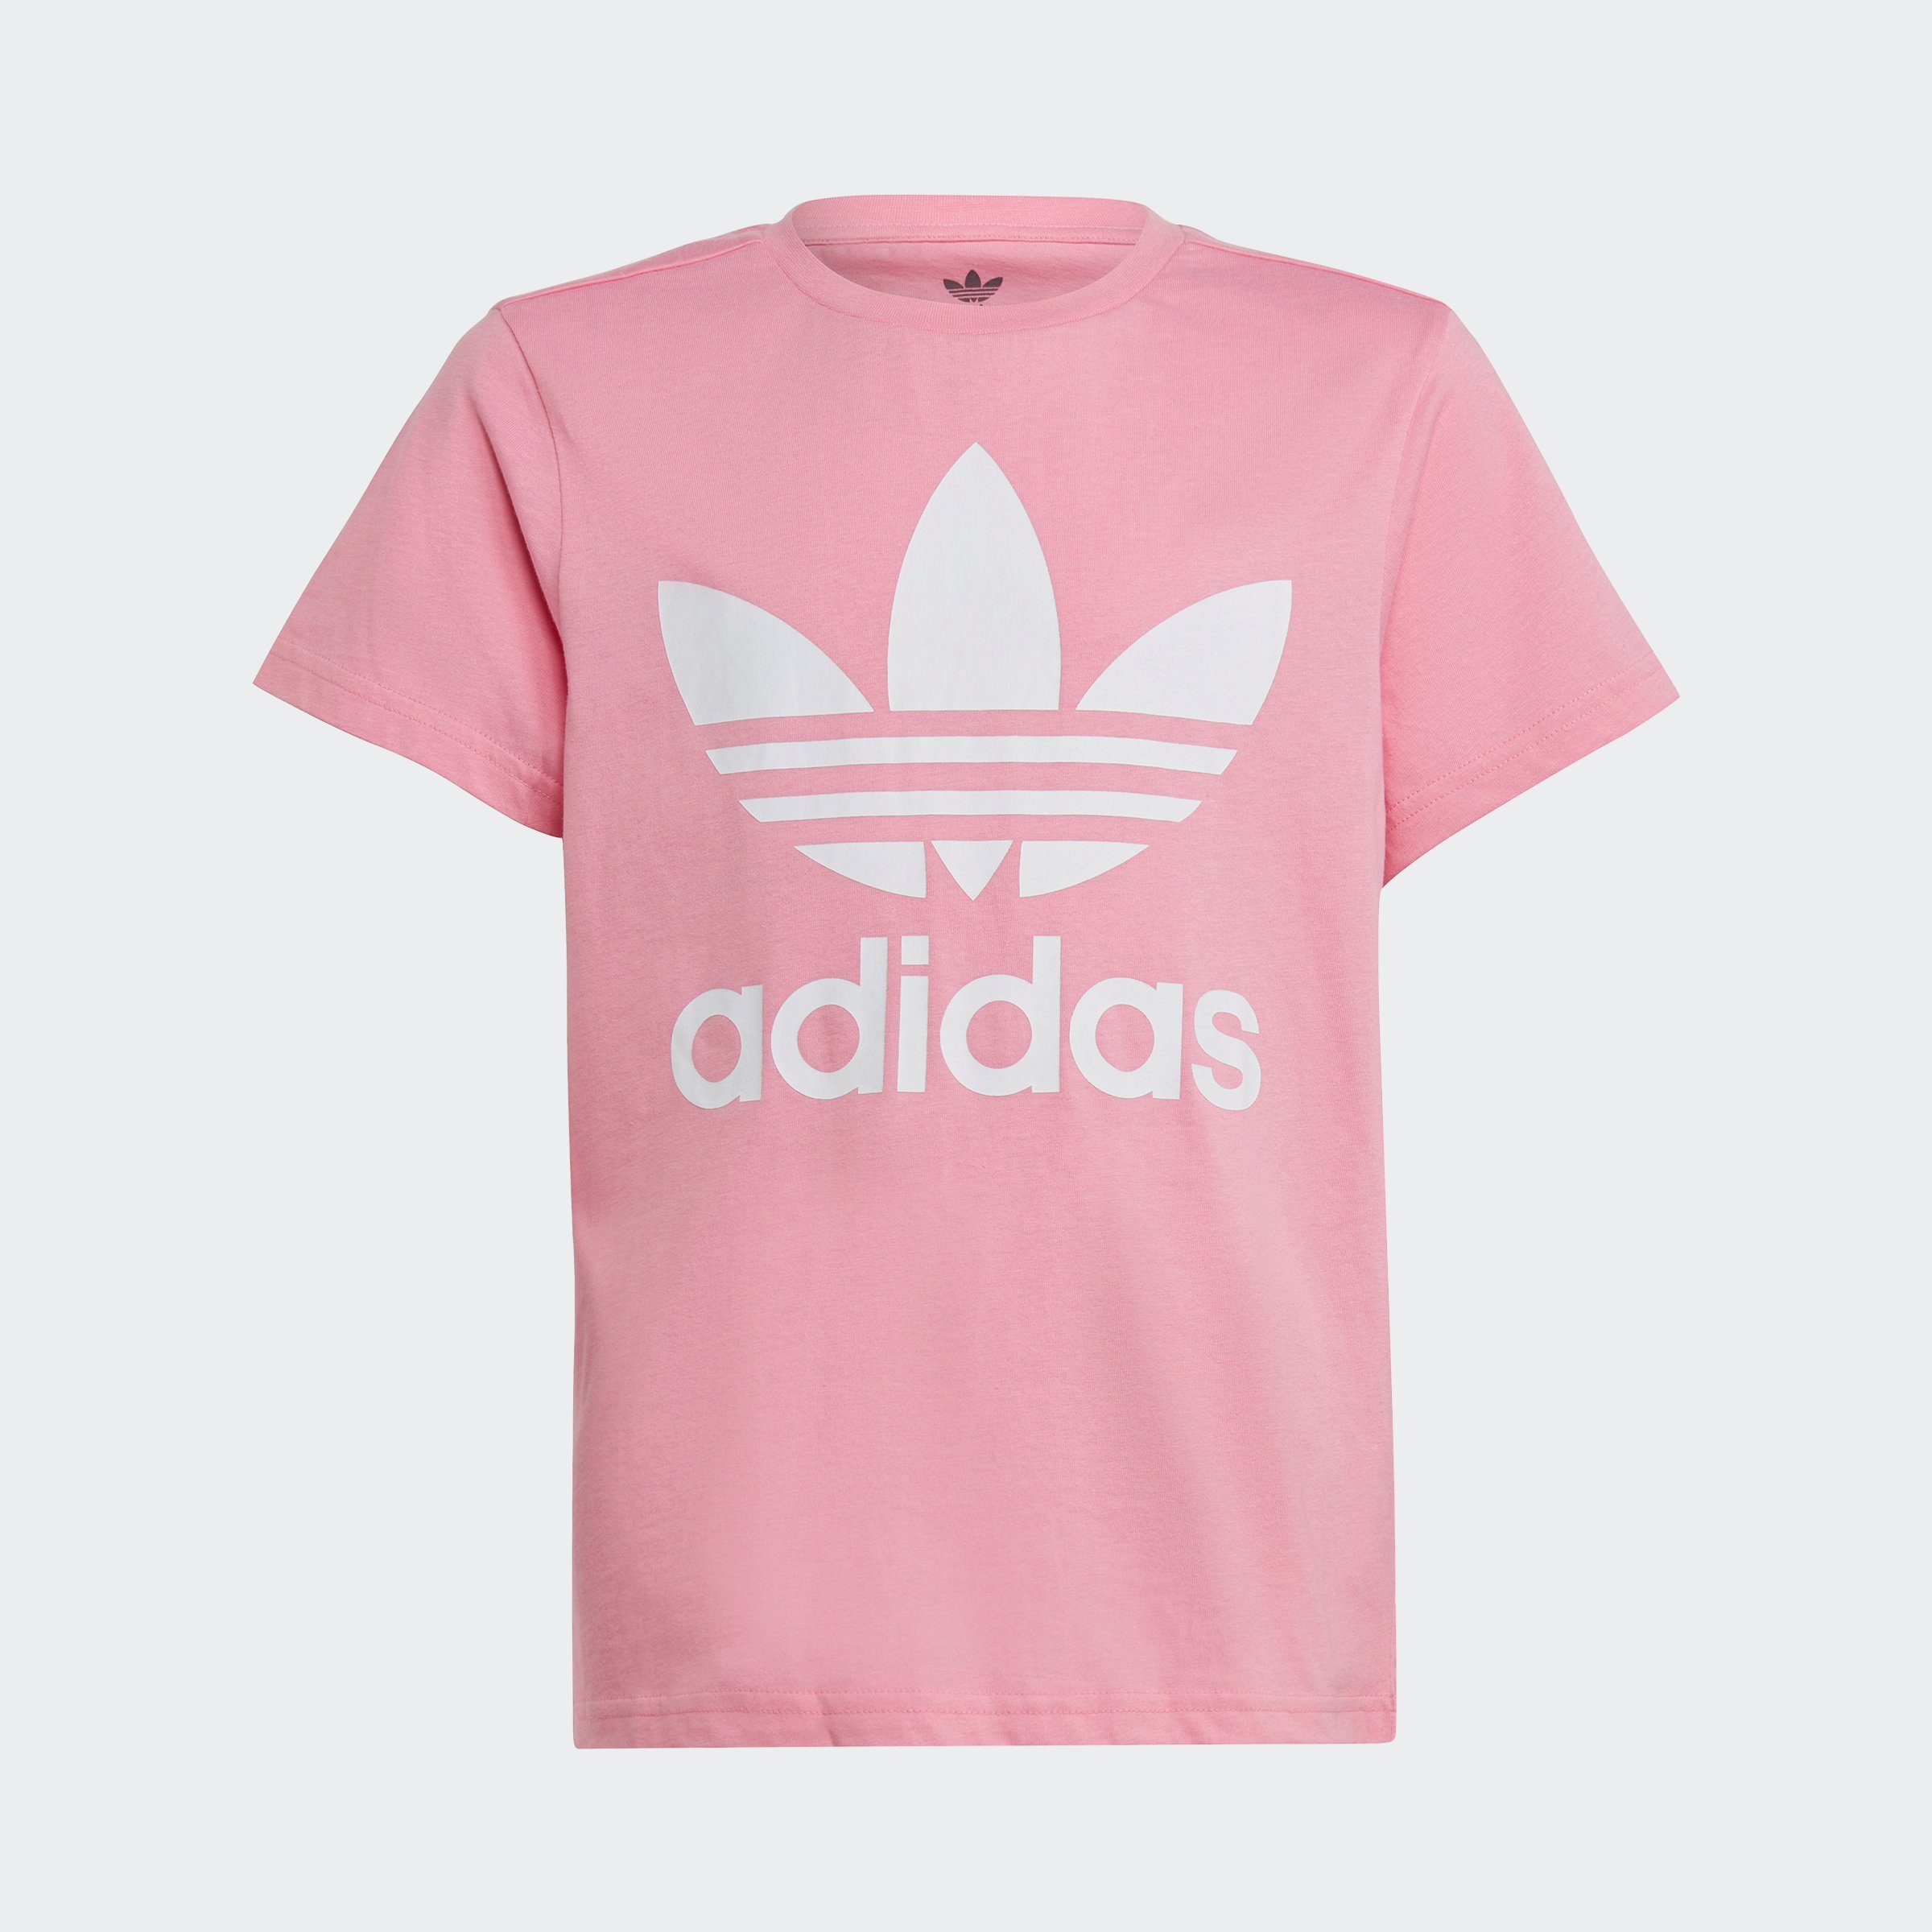 adidas Originals T-Shirt TREFOIL TEE / Bliss White Pink Unisex